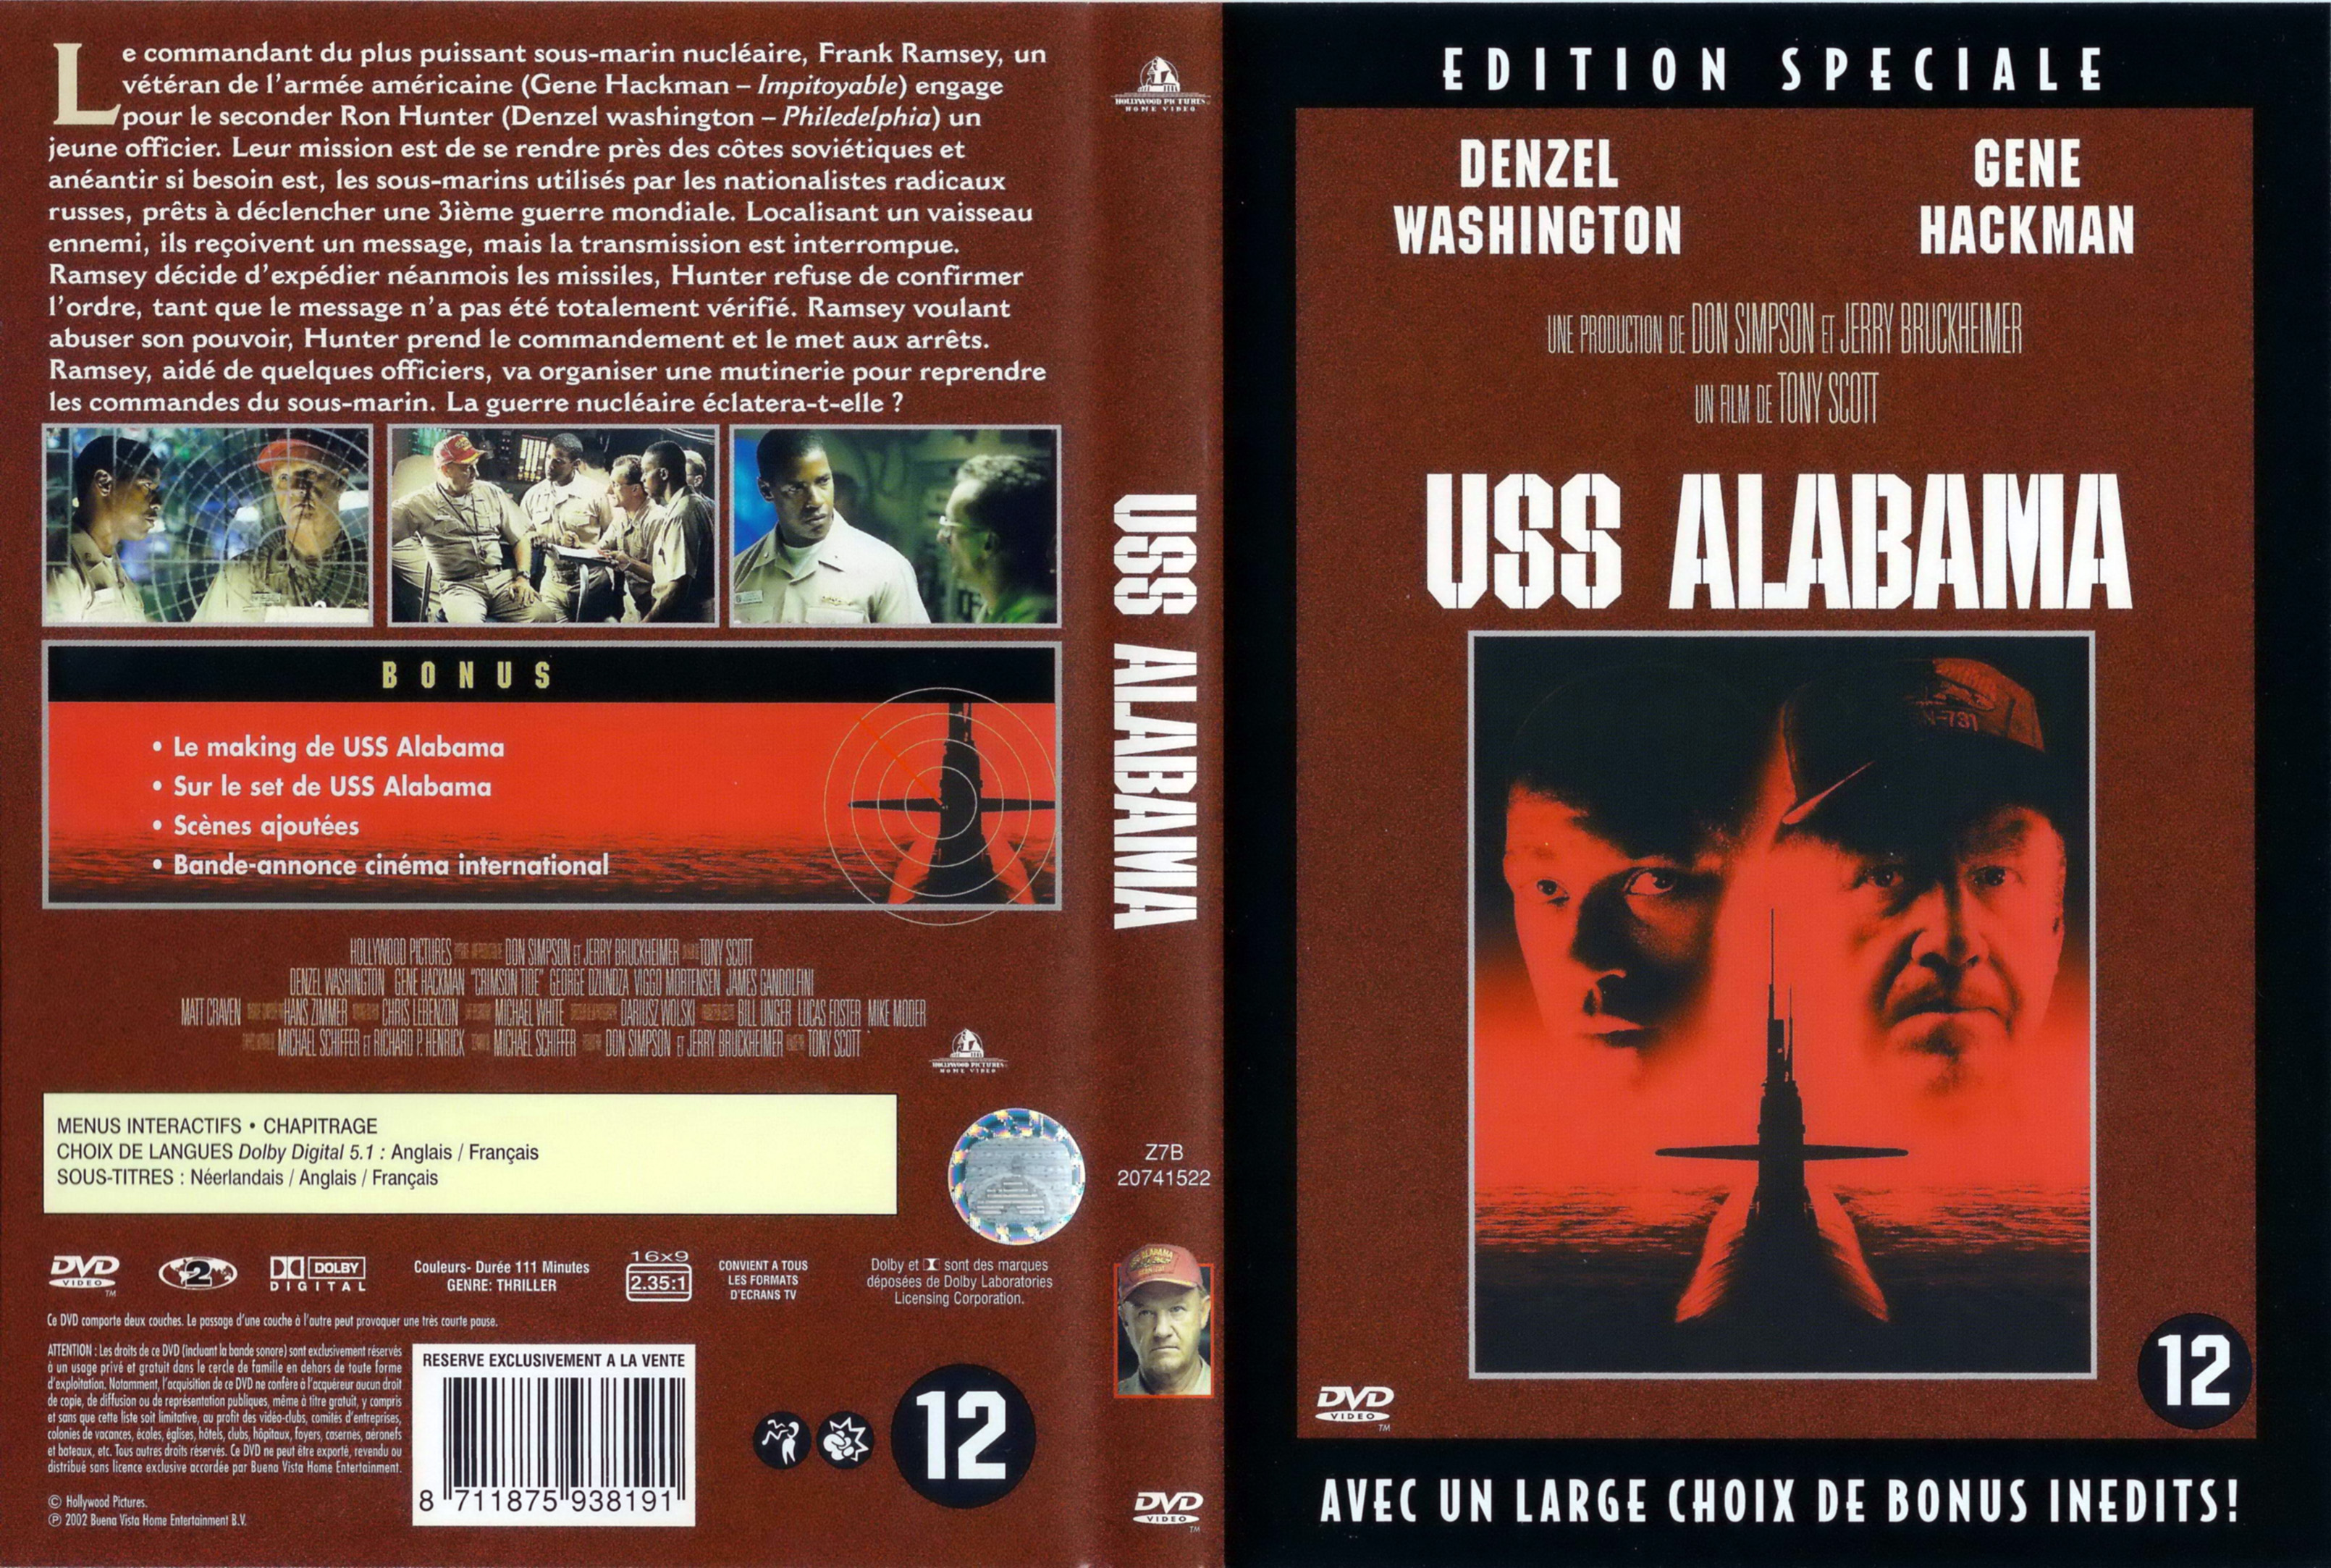 Jaquette DVD USS Alabama v4